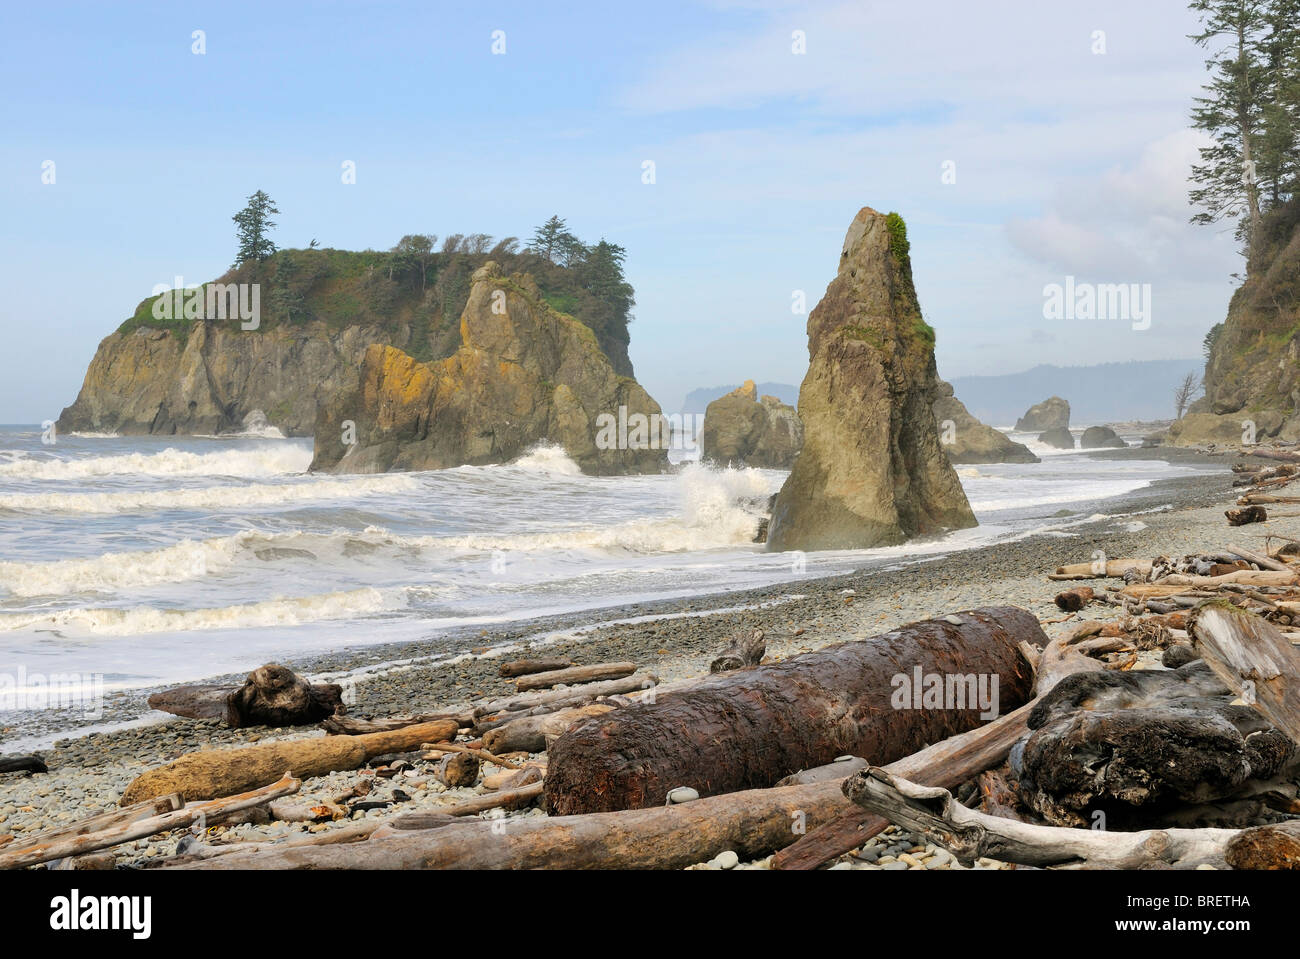 Rock formations and driftwood on the Pacific coast, Ruby Beach, Olympic Peninsula, Washington, USA Stock Photo